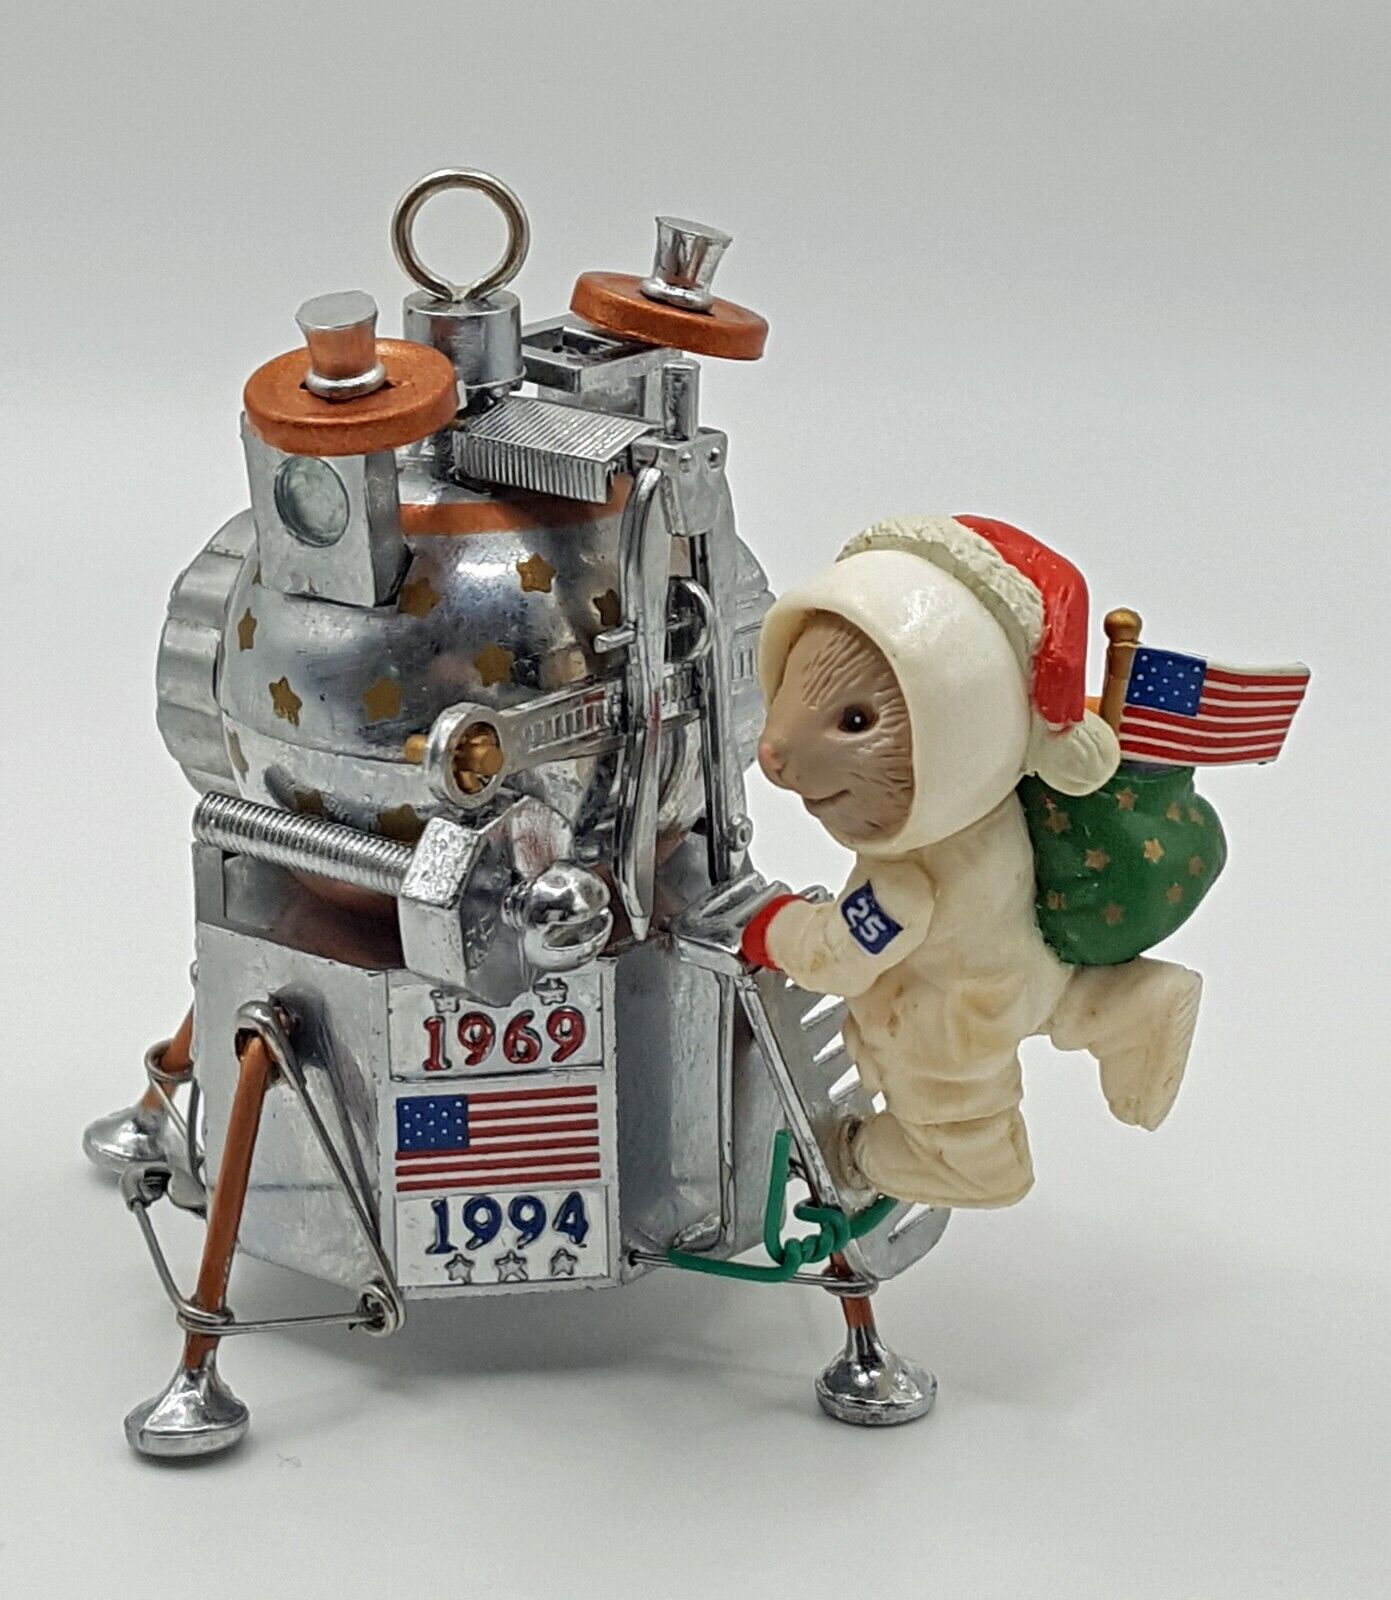 Vintage~~1994 NASA 25th Anniversary of Lunar Landing Christmas Ornament~~ New